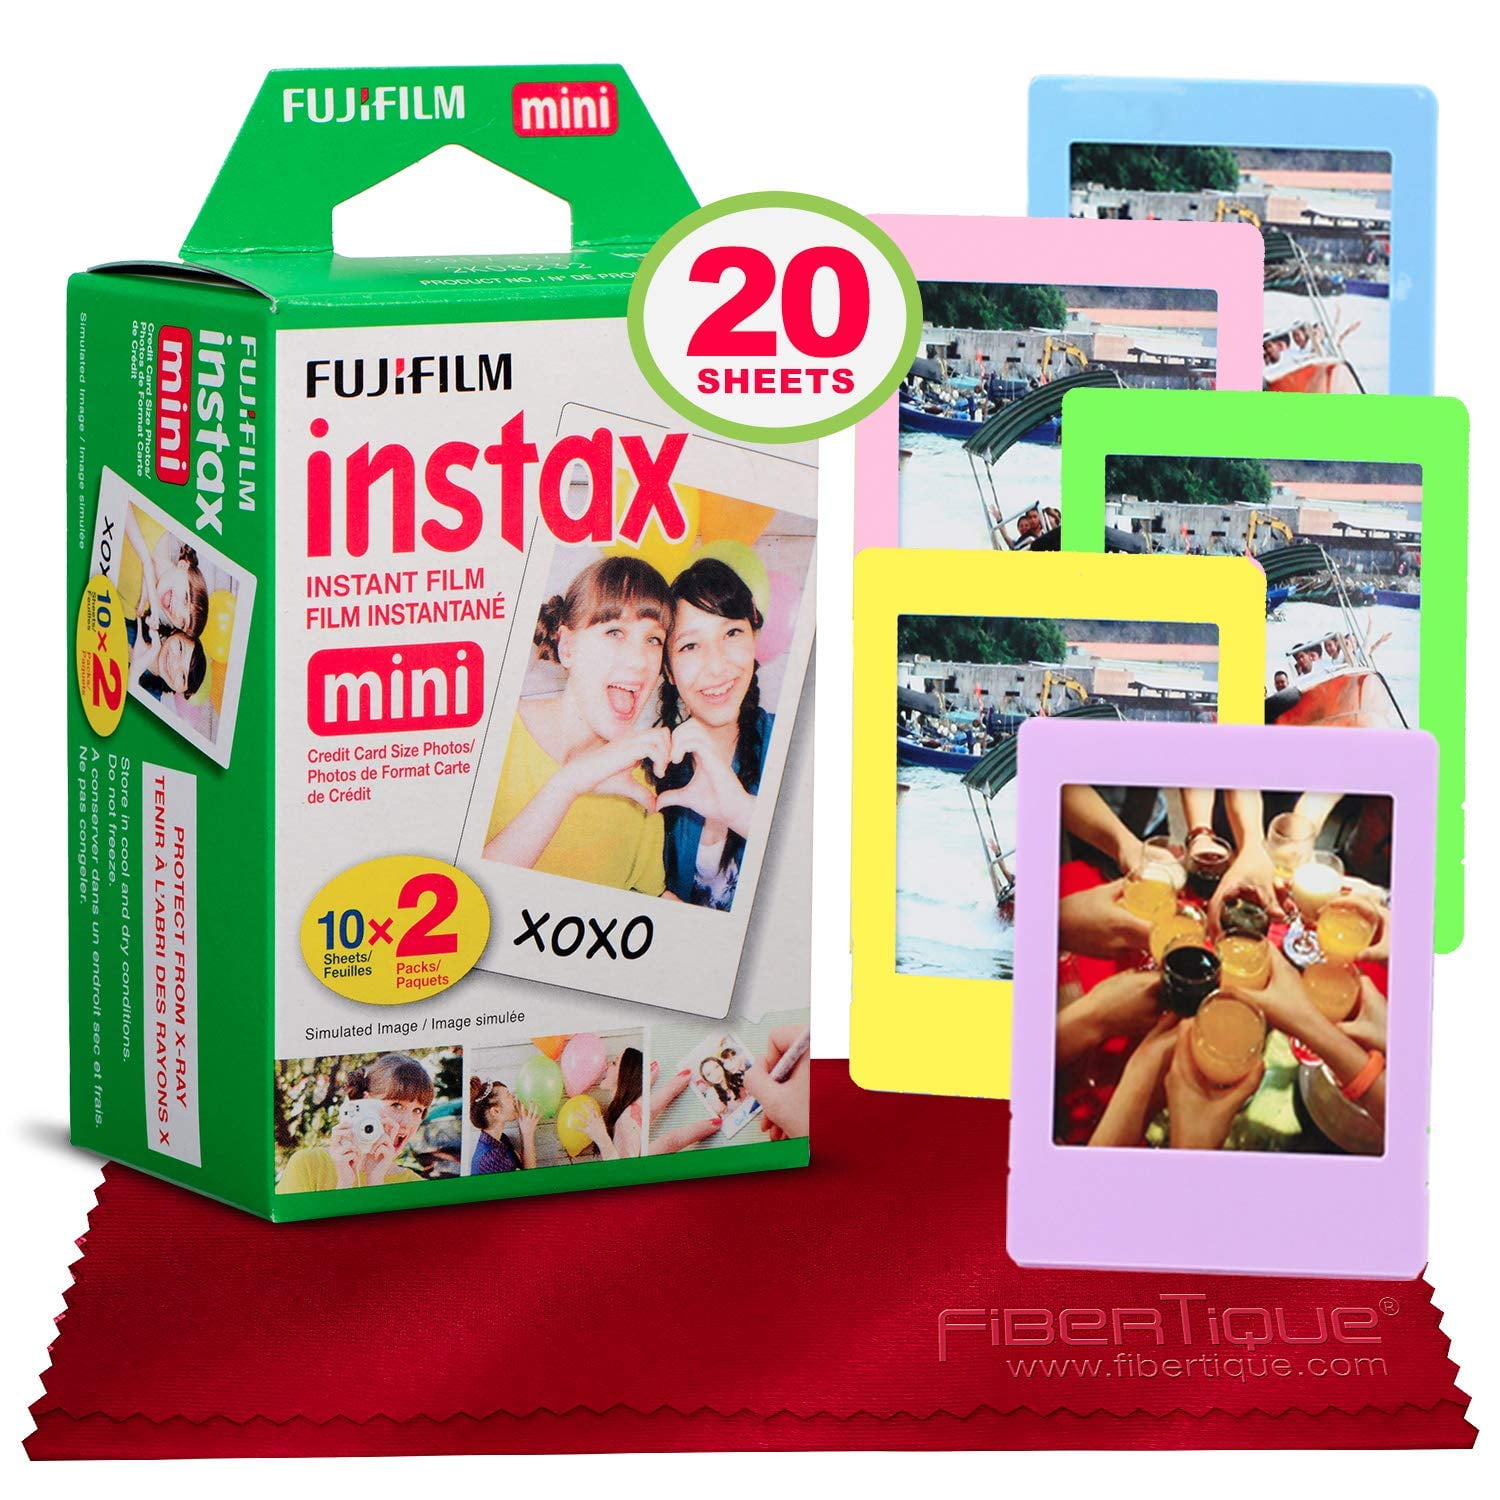 Sprong Duiker verbinding verbroken Fujifilm Instax Mini Instant Film (80 Sheets) for Fujifilm Instax Mini + 5  Picture Frames + FiberTique Cleaning Cloth (USA Warranty) - Walmart.com